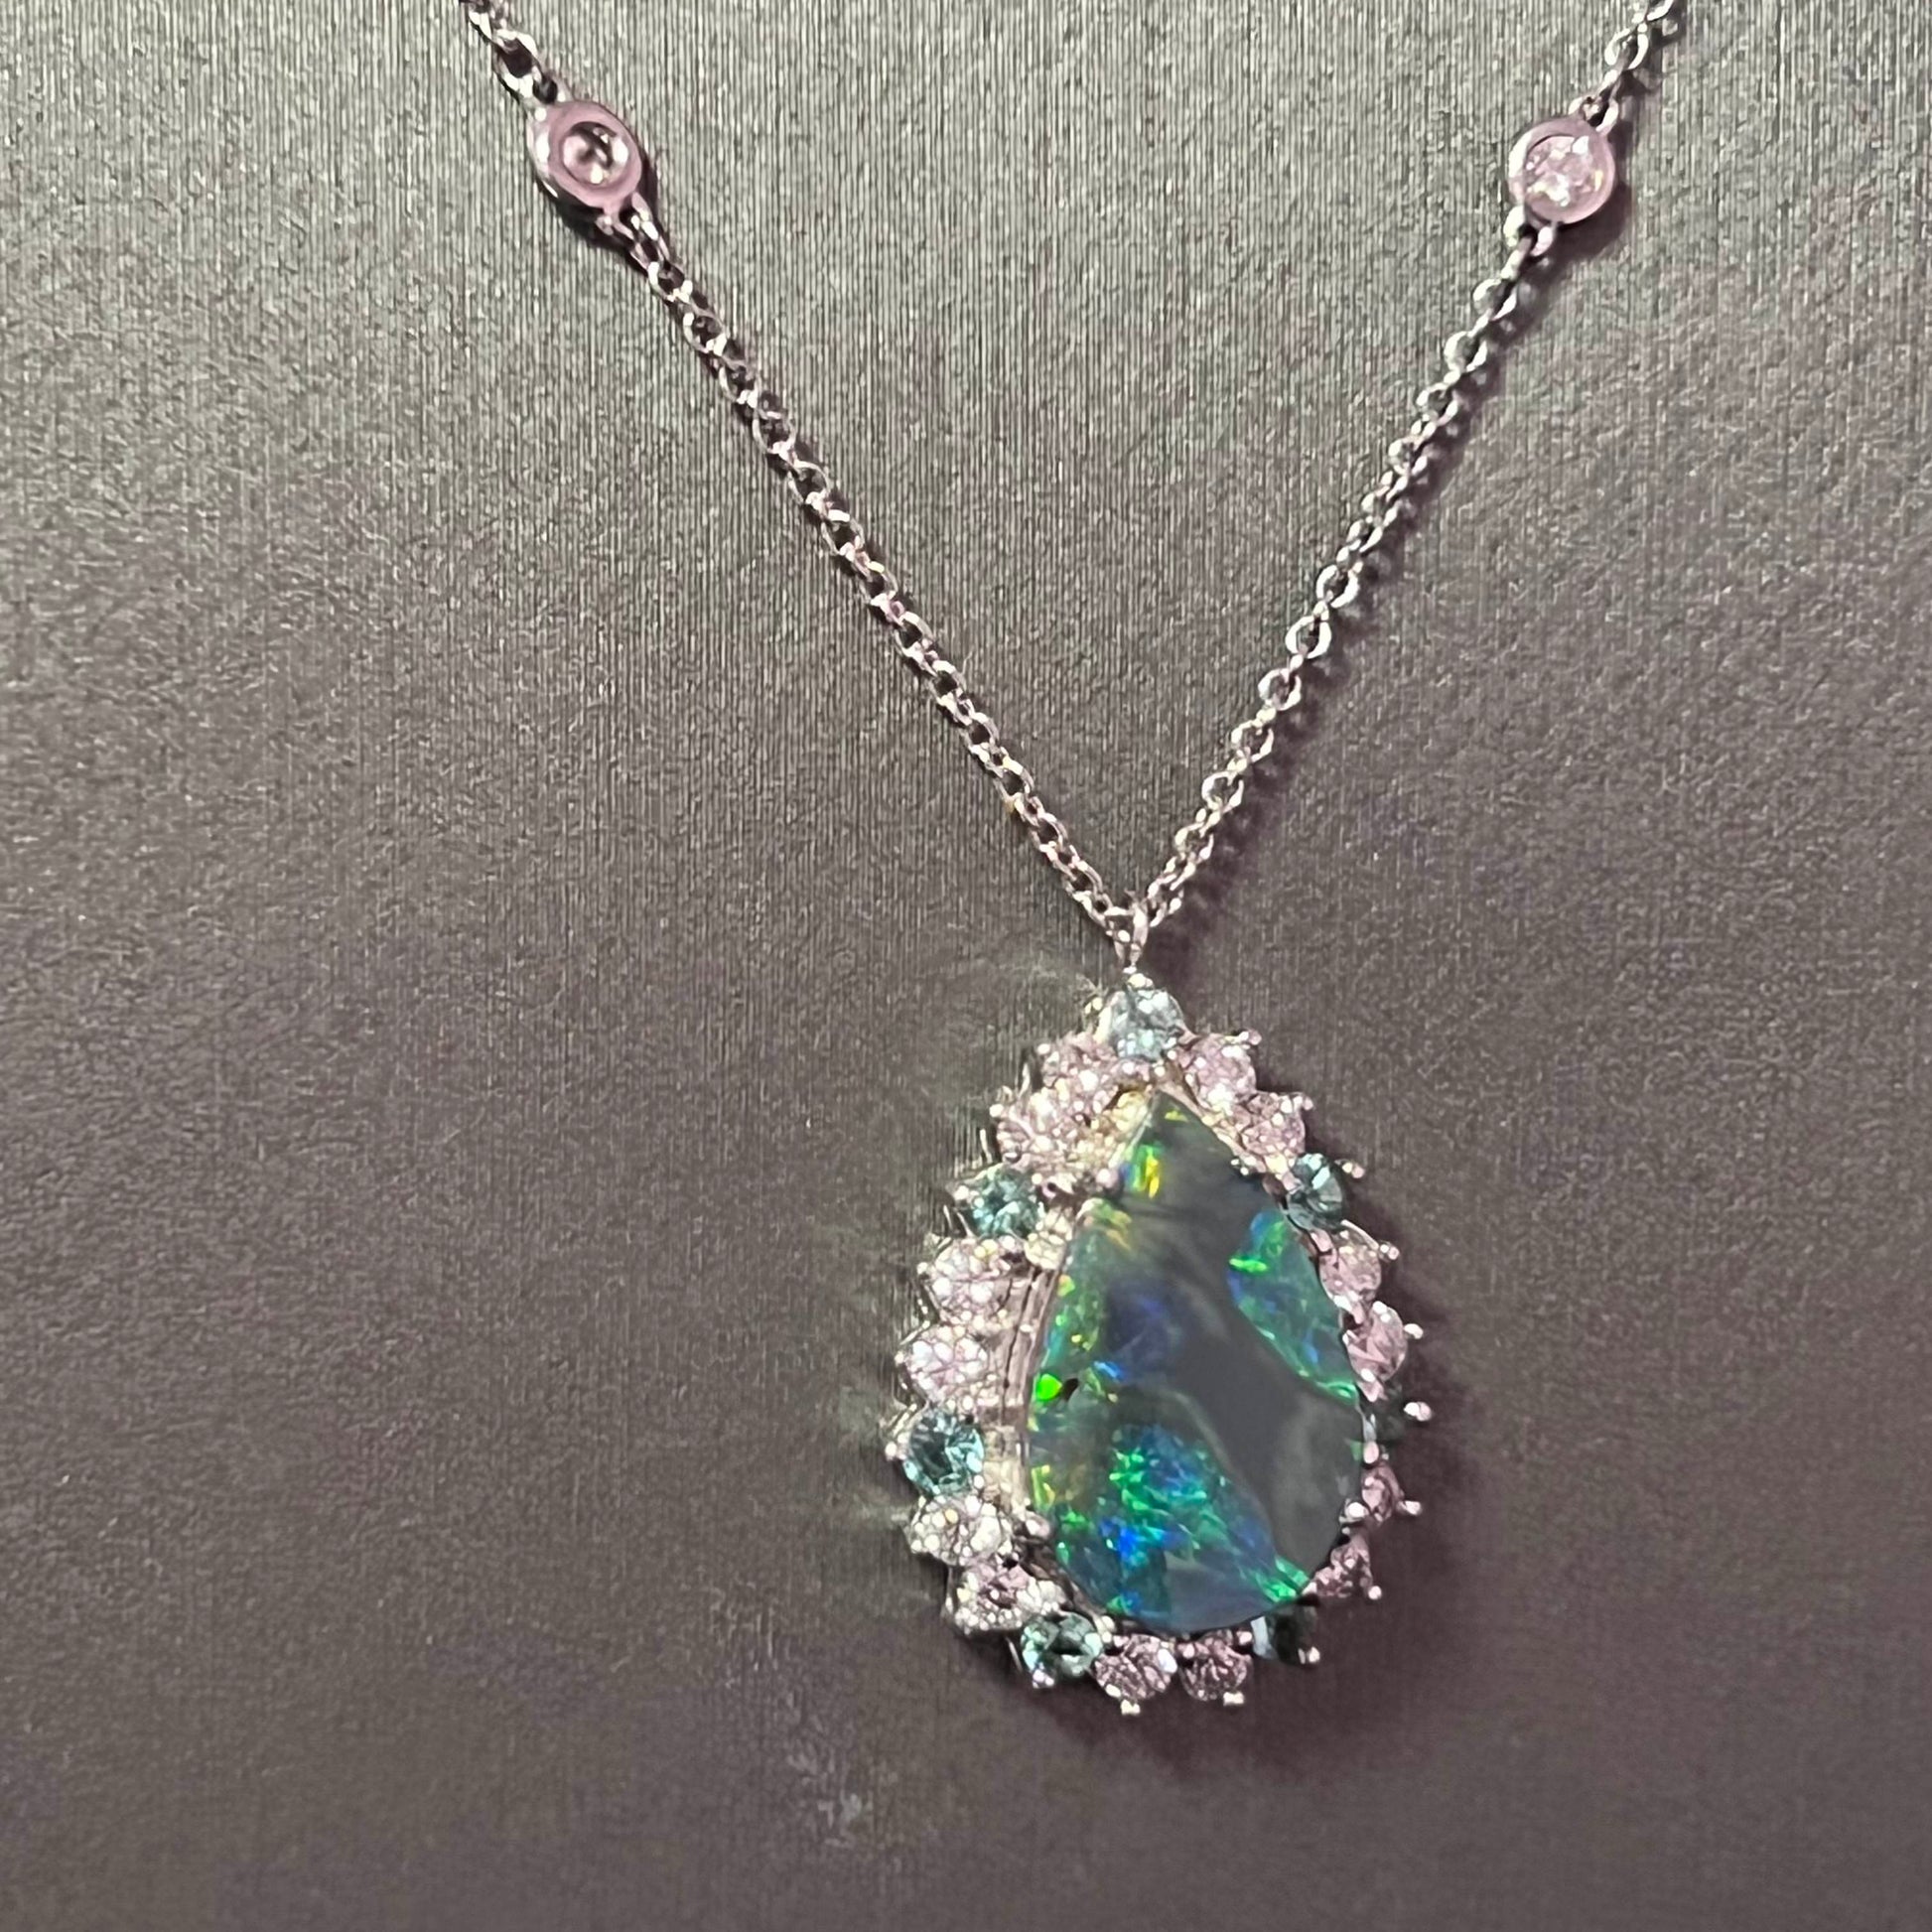 Natural Opal Diamond Pendant w/ 18" Gold Chain 3.25 TCW GIA Certified $8,950 211197 - Certified Fine Jewelry